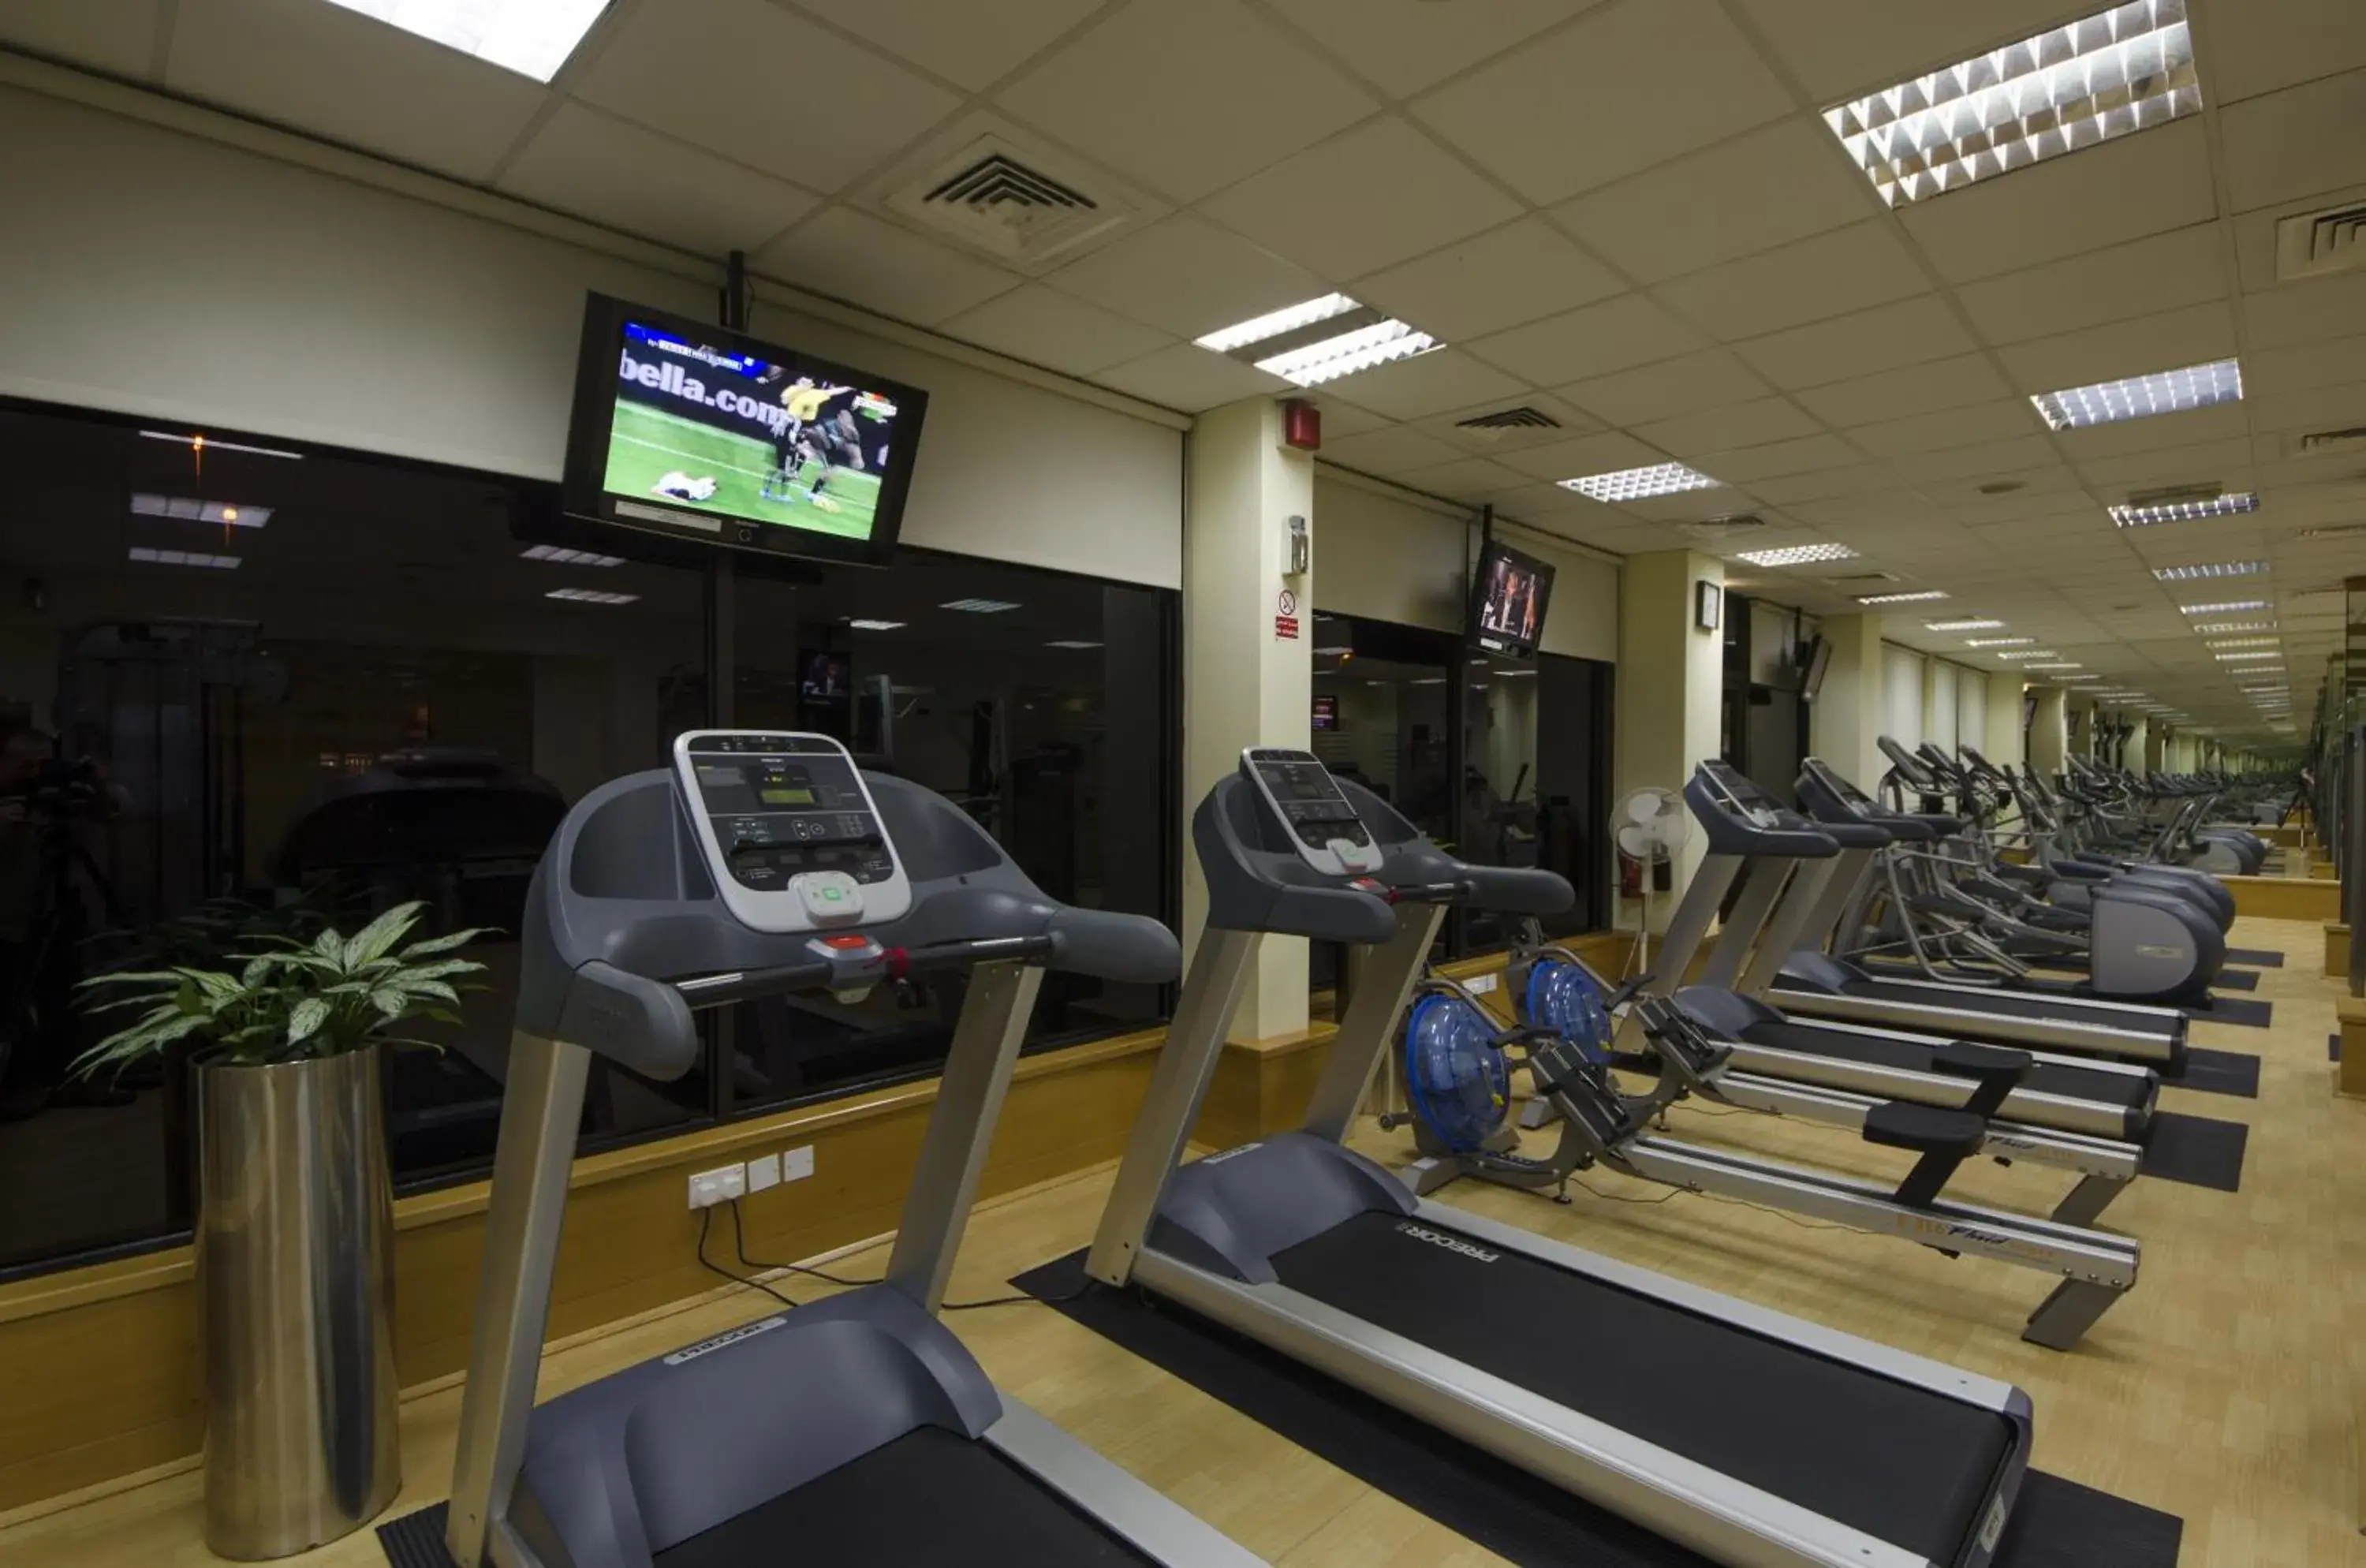 Fitness centre/facilities, Fitness Center/Facilities in The Apartments, Dubai World Trade Centre Hotel Apartments